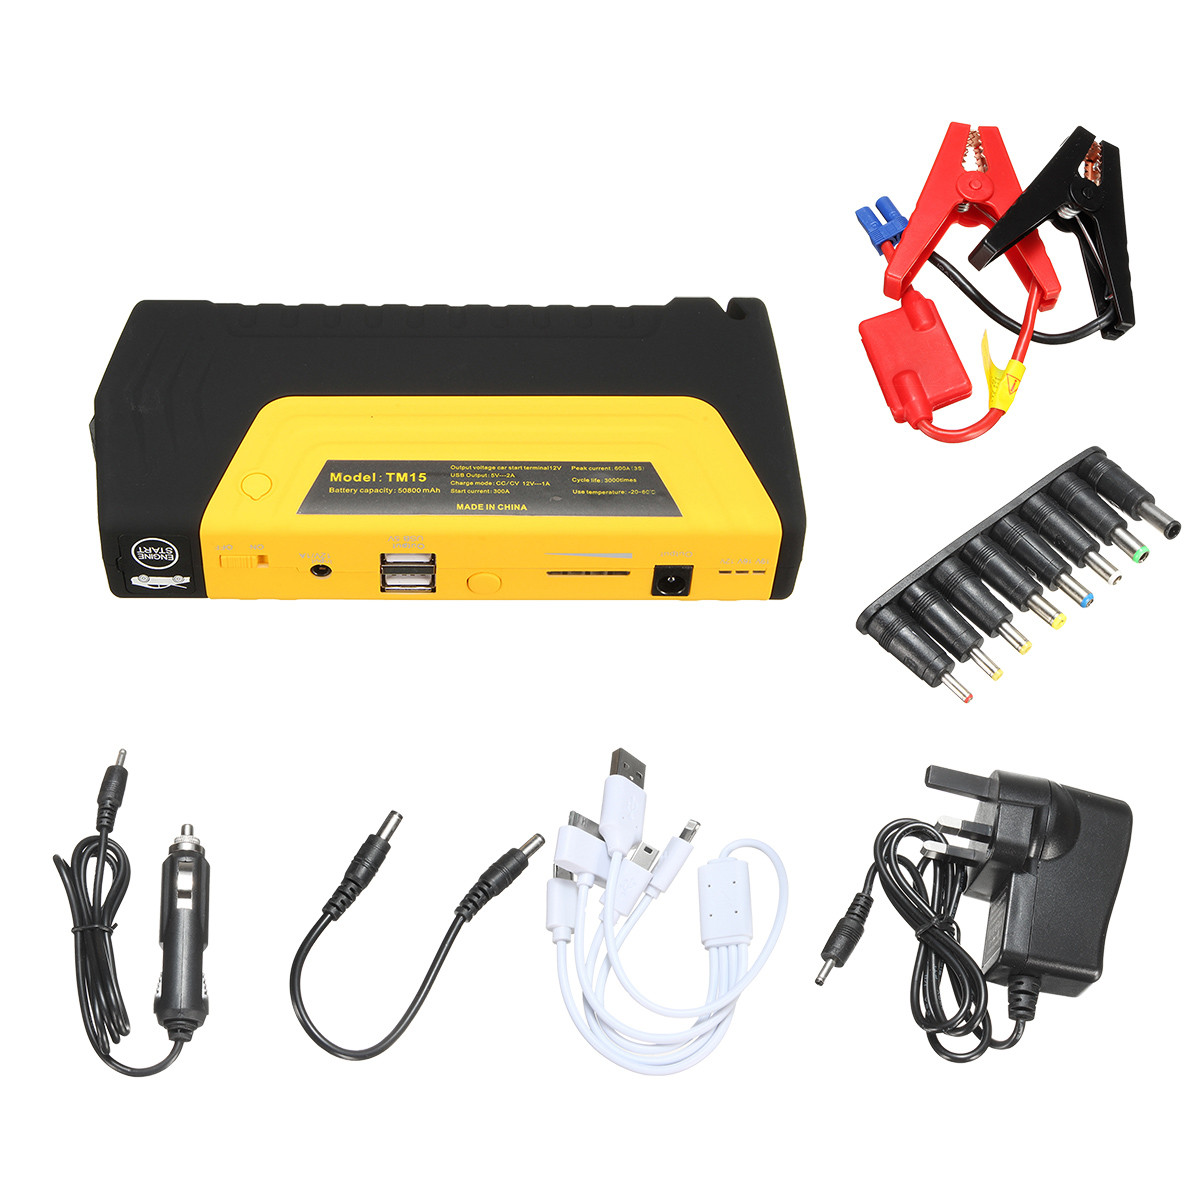 50800mAh-LED-Dual-USB-Car-Jump-Starter-Booster-Portable-Power-Bank-Backup-Charger-1113683